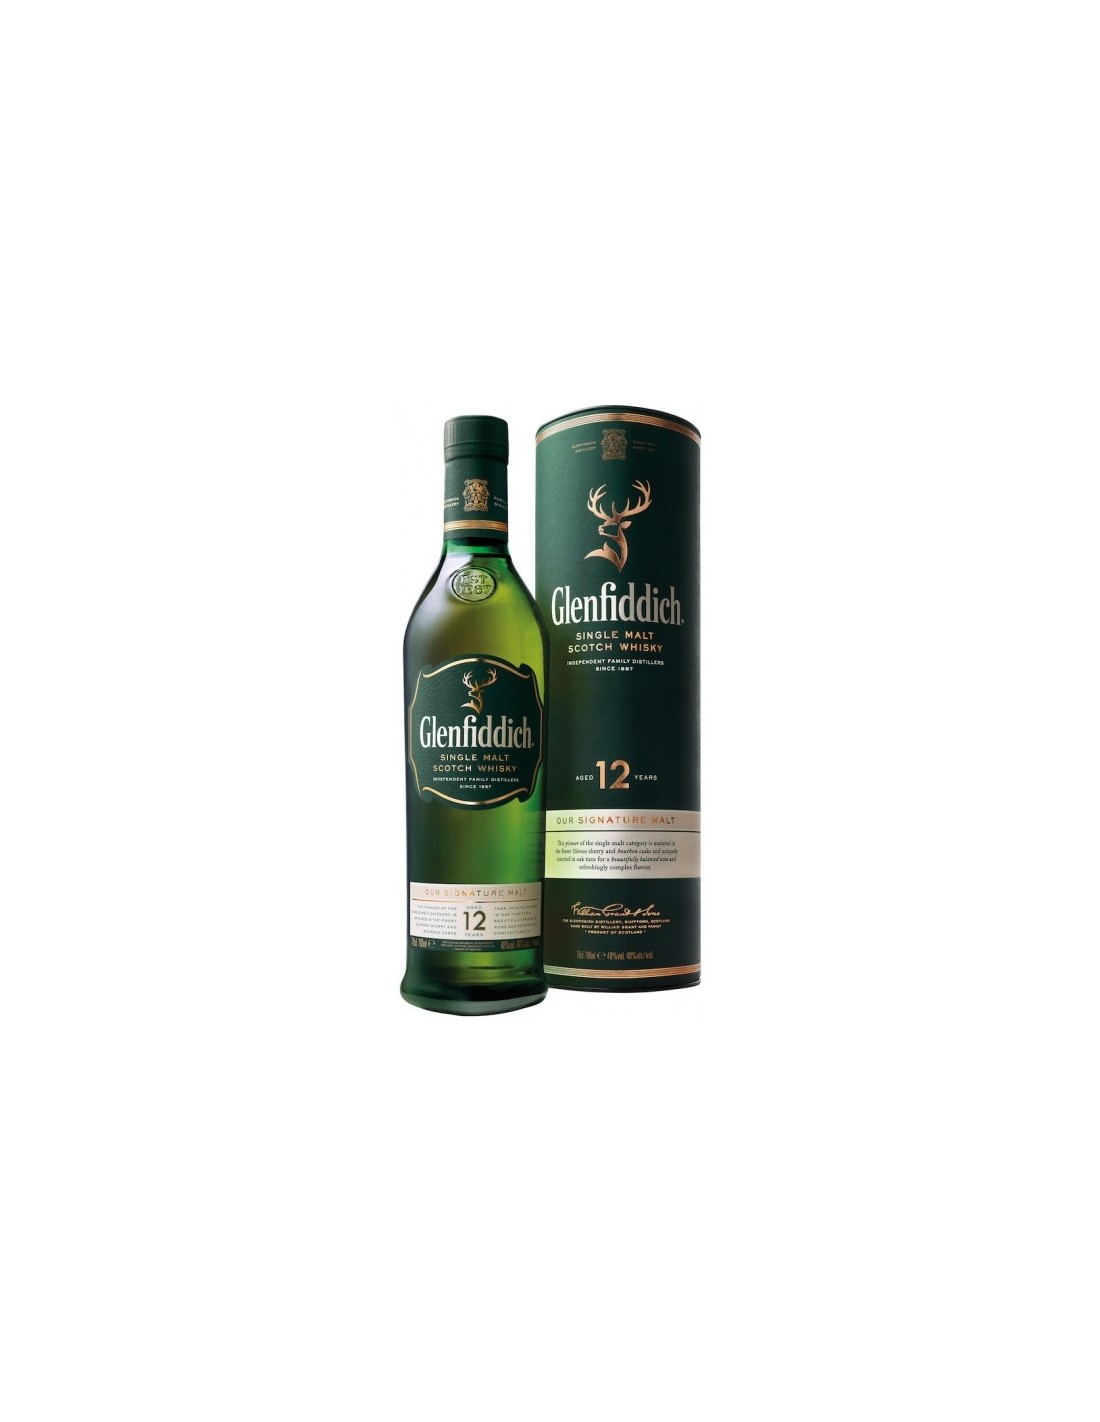 Whisky Glenfiddich, 0.7L, 12 ani, 40% alc., Scotia alcooldiscount.ro